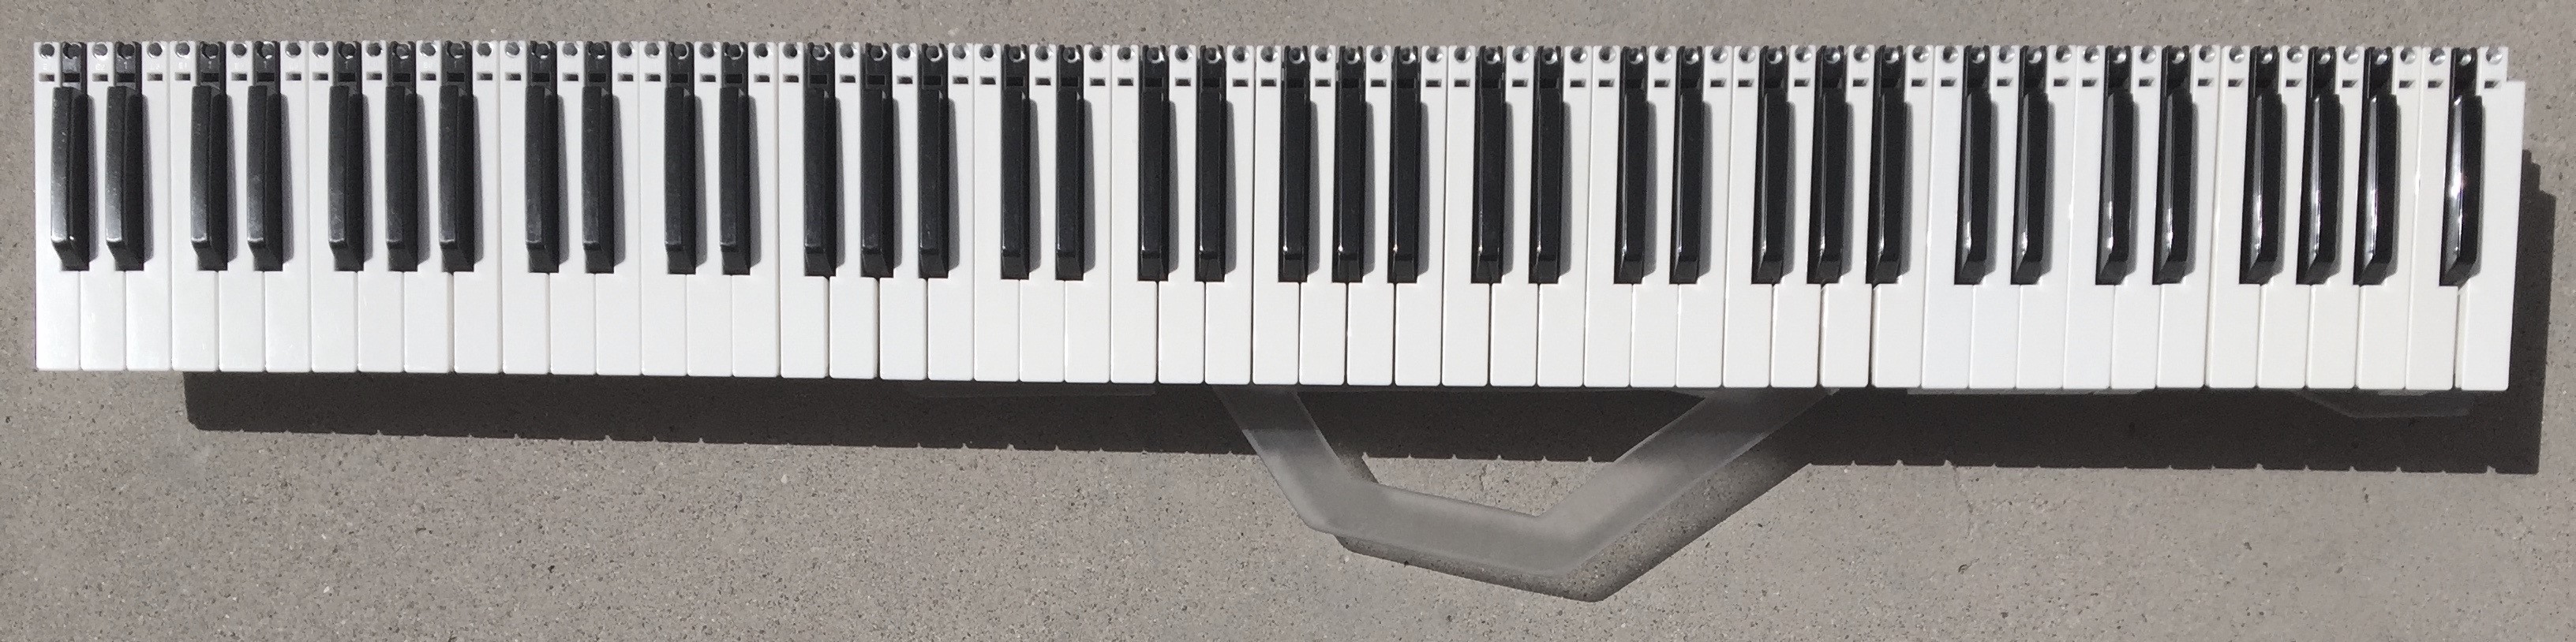 17-tone "Insanetar" Vertical Keyboard